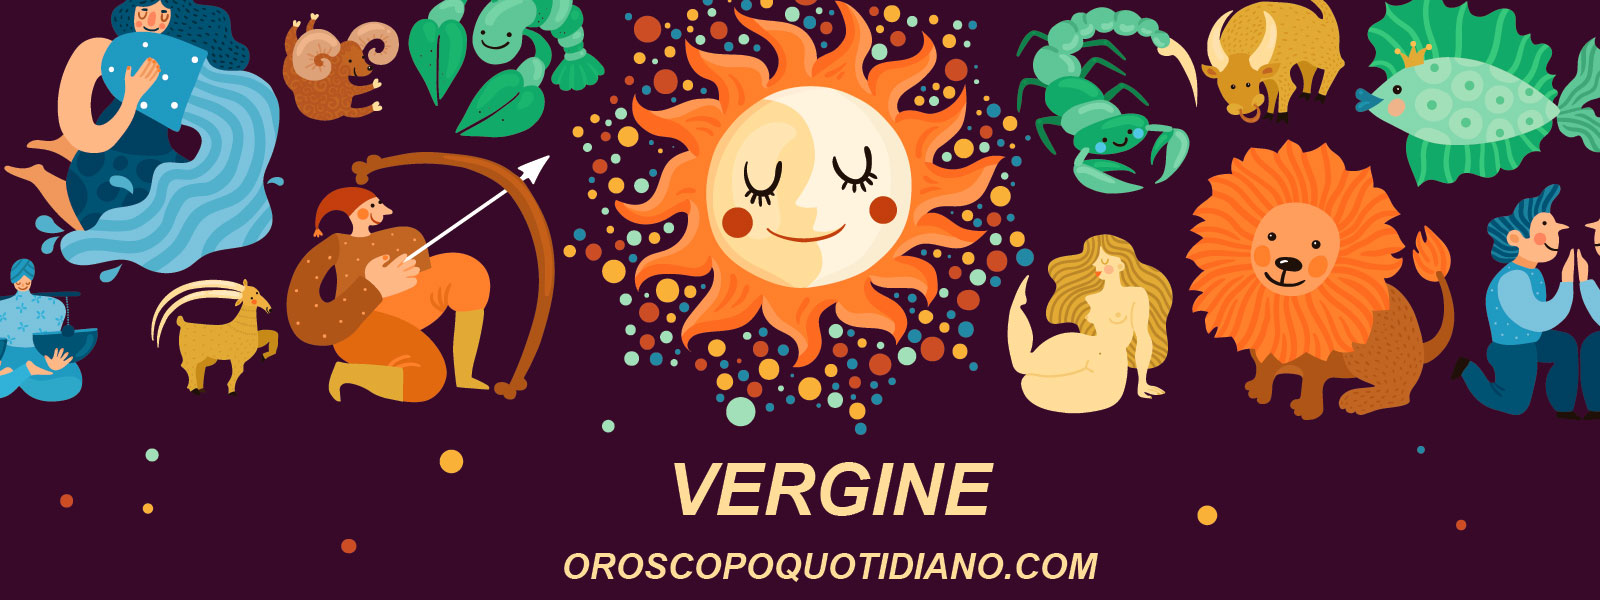 https://oroscopoquotidiano.com/wp-content/uploads/2020/02/Vergine-per-Oroscopo-Quotidiano.jpg